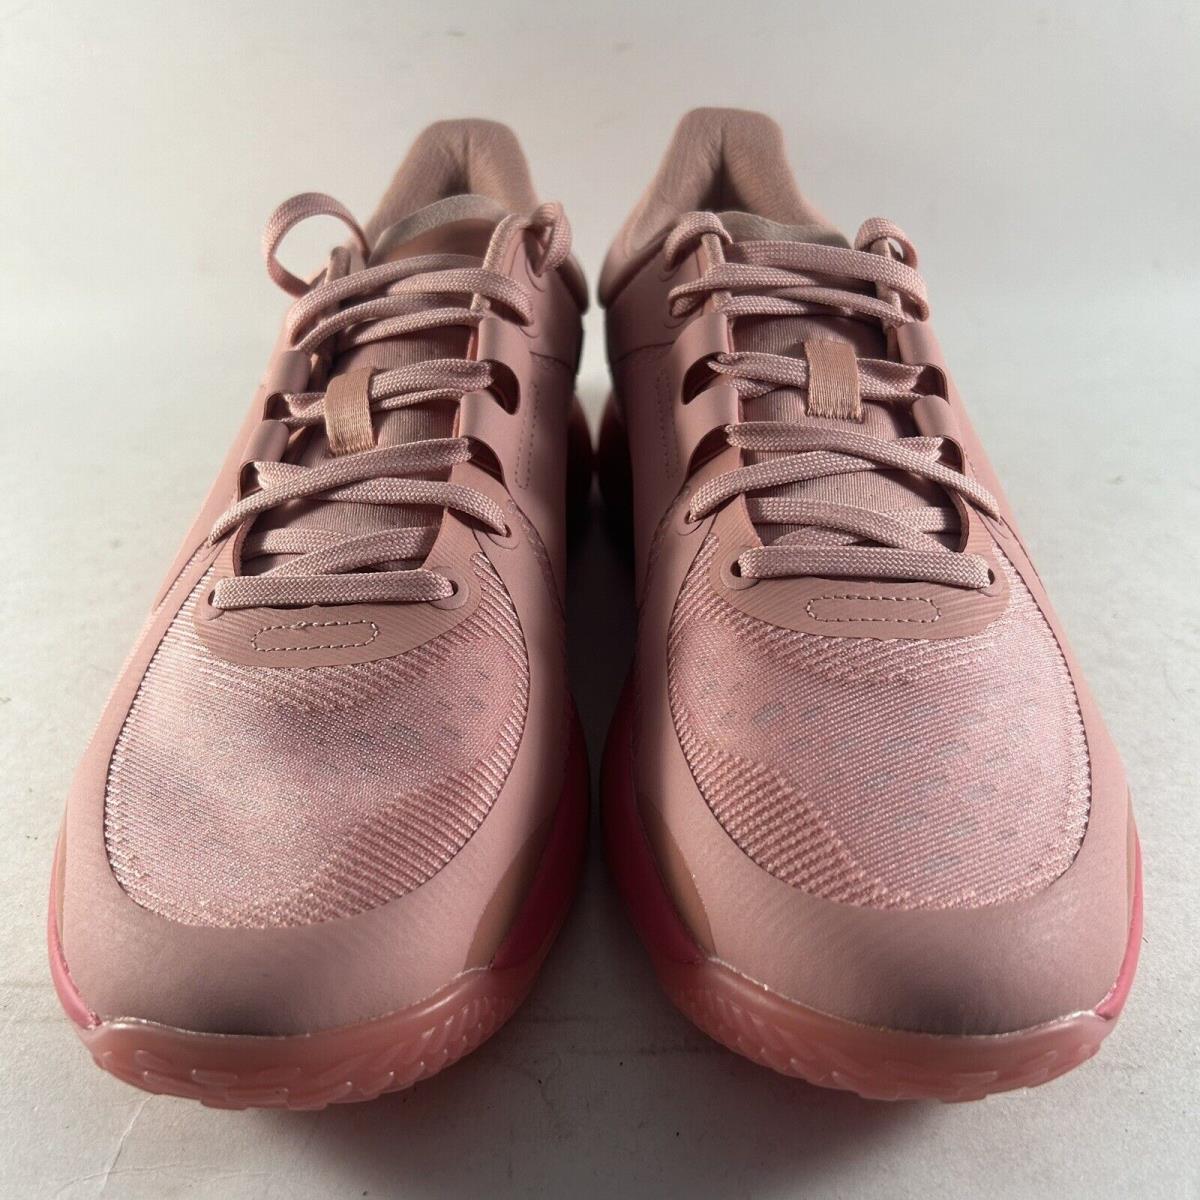 Lululemon Strongfeel Train Women s Training Shoes Sneakers Pink Size 9